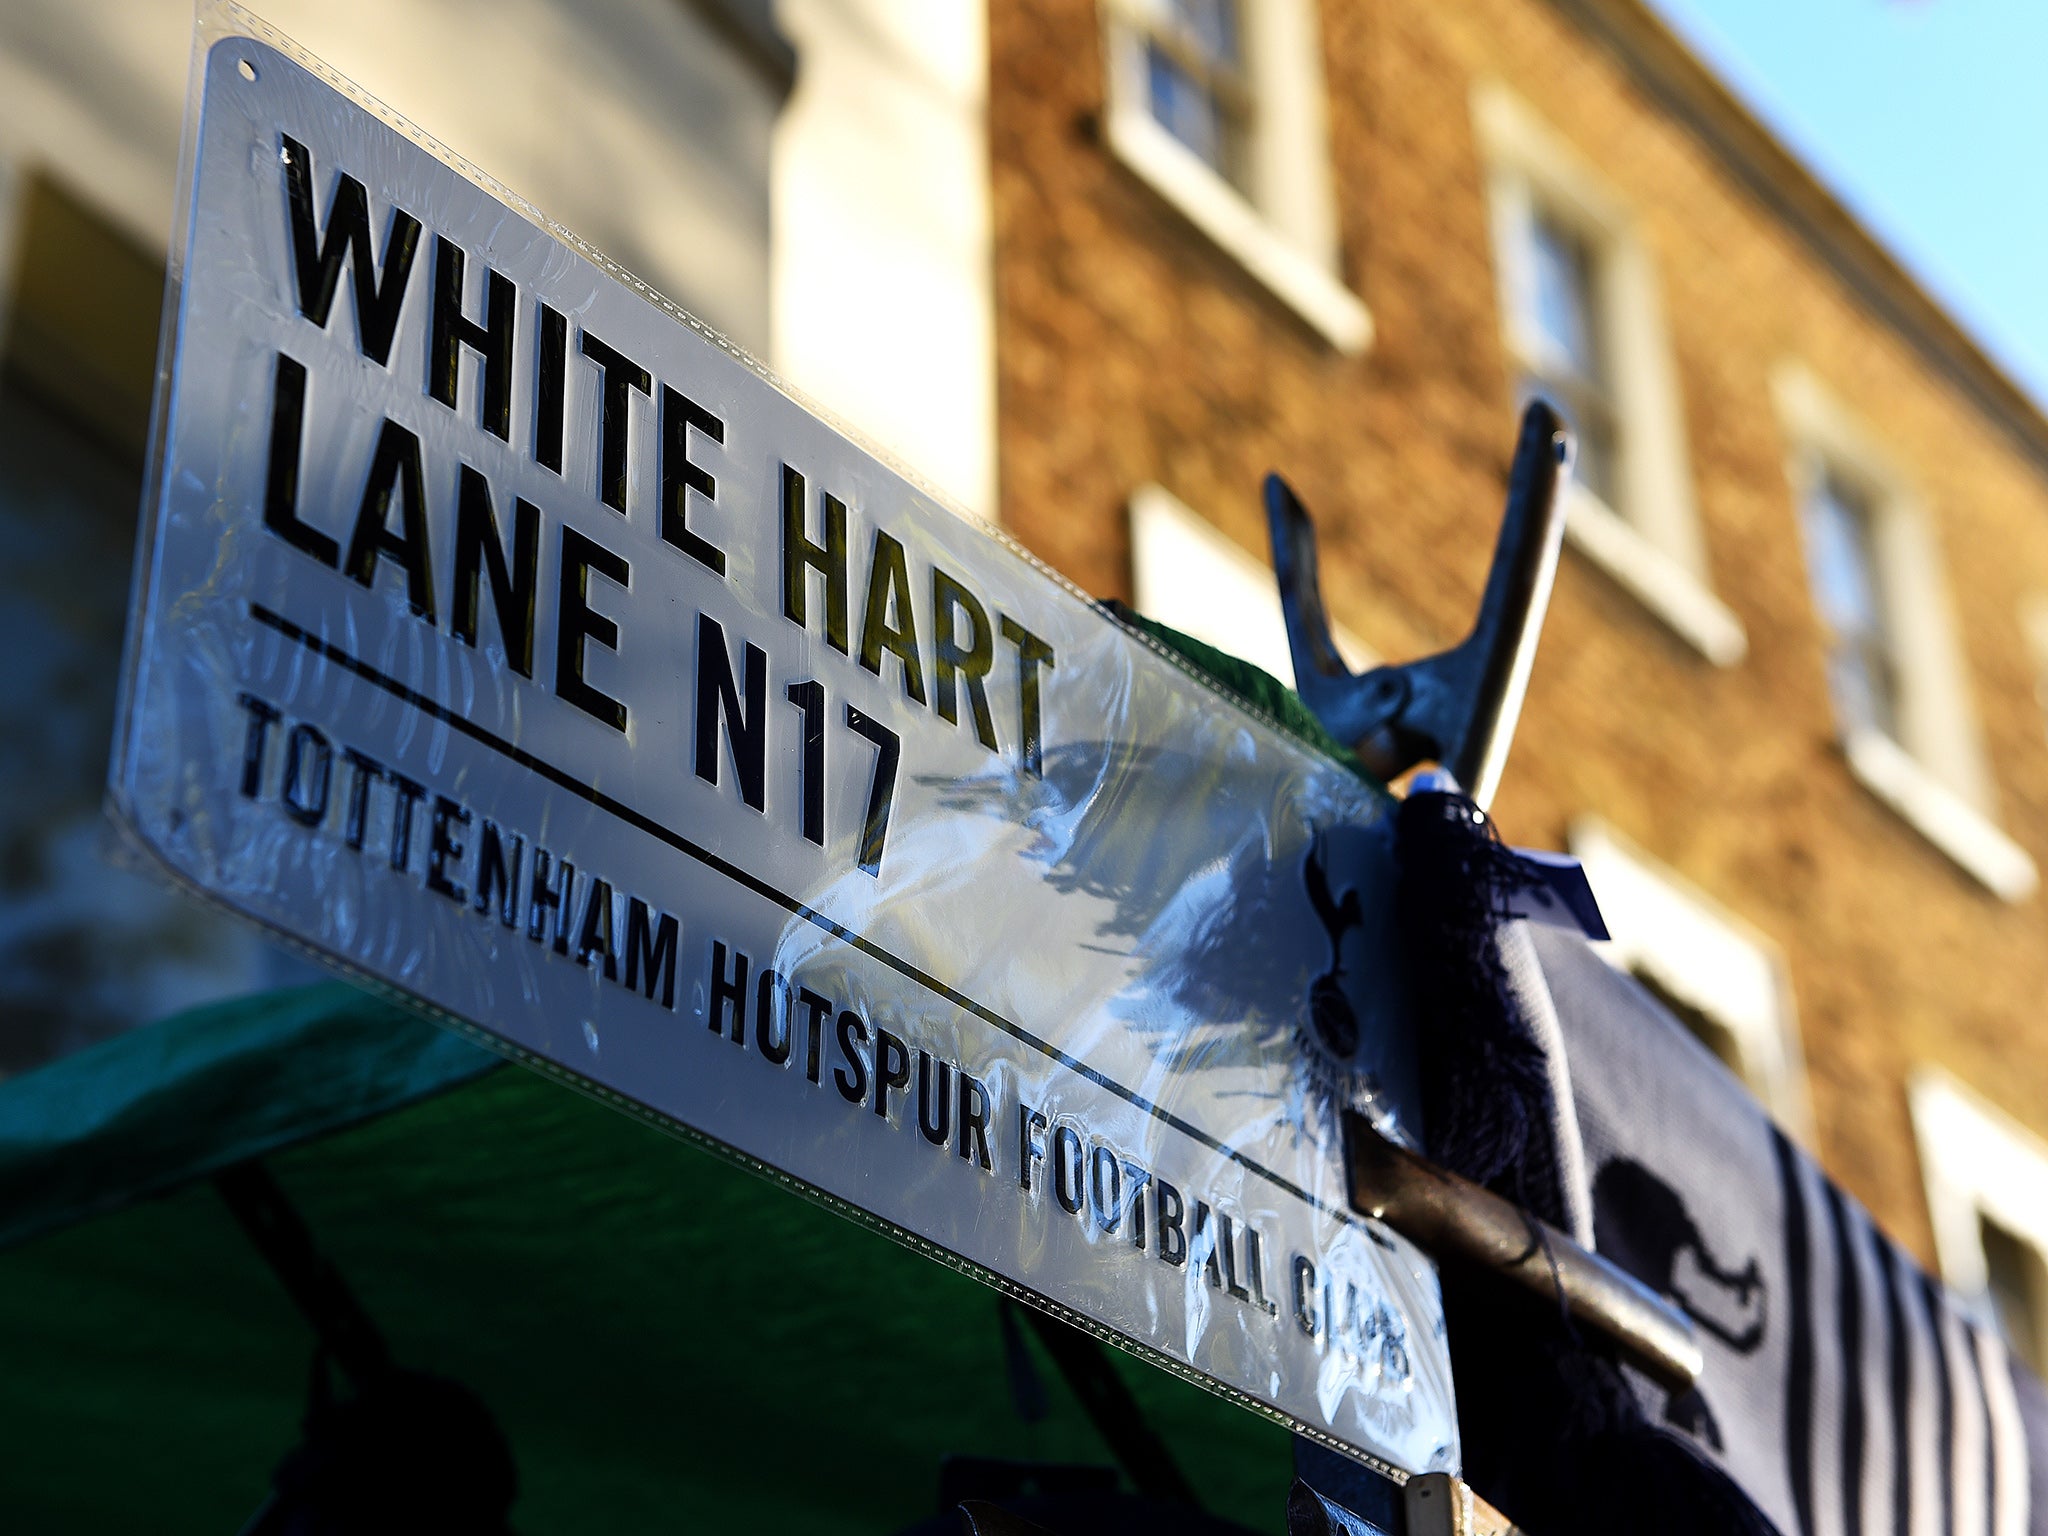 A sign outside Tottenham Hotspur's ground White Hart Lane